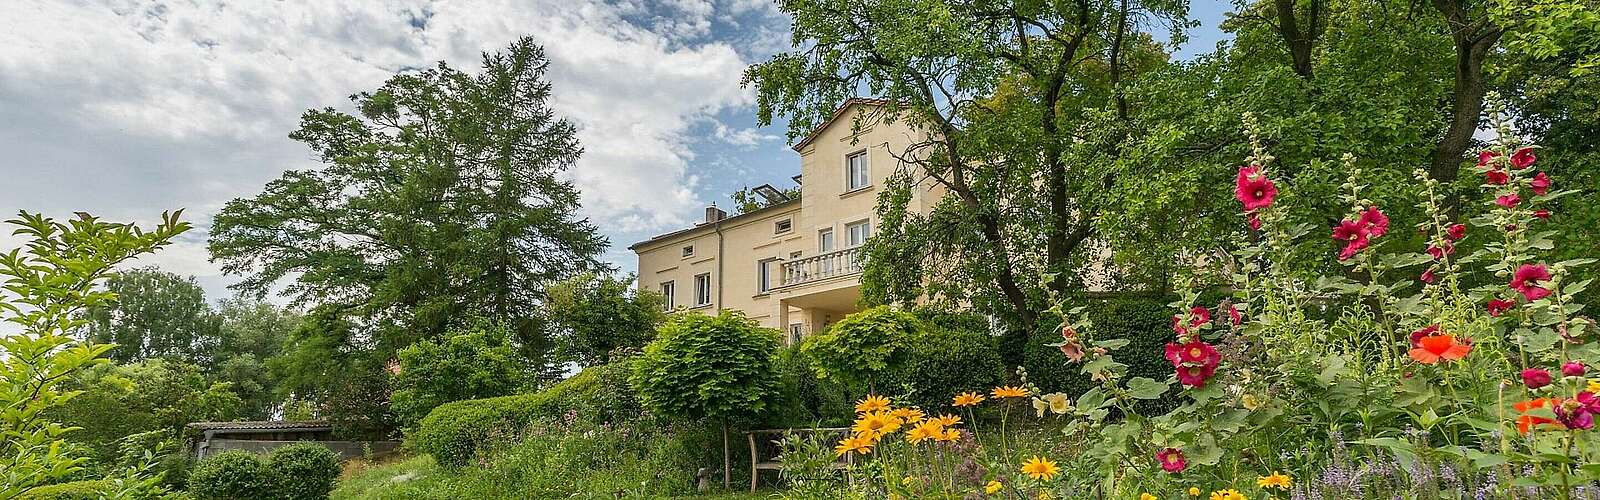 Villa am Trumpf,
        
    

        Foto: Fotograf / Lizenz - Media Import/Steffen Lehmann